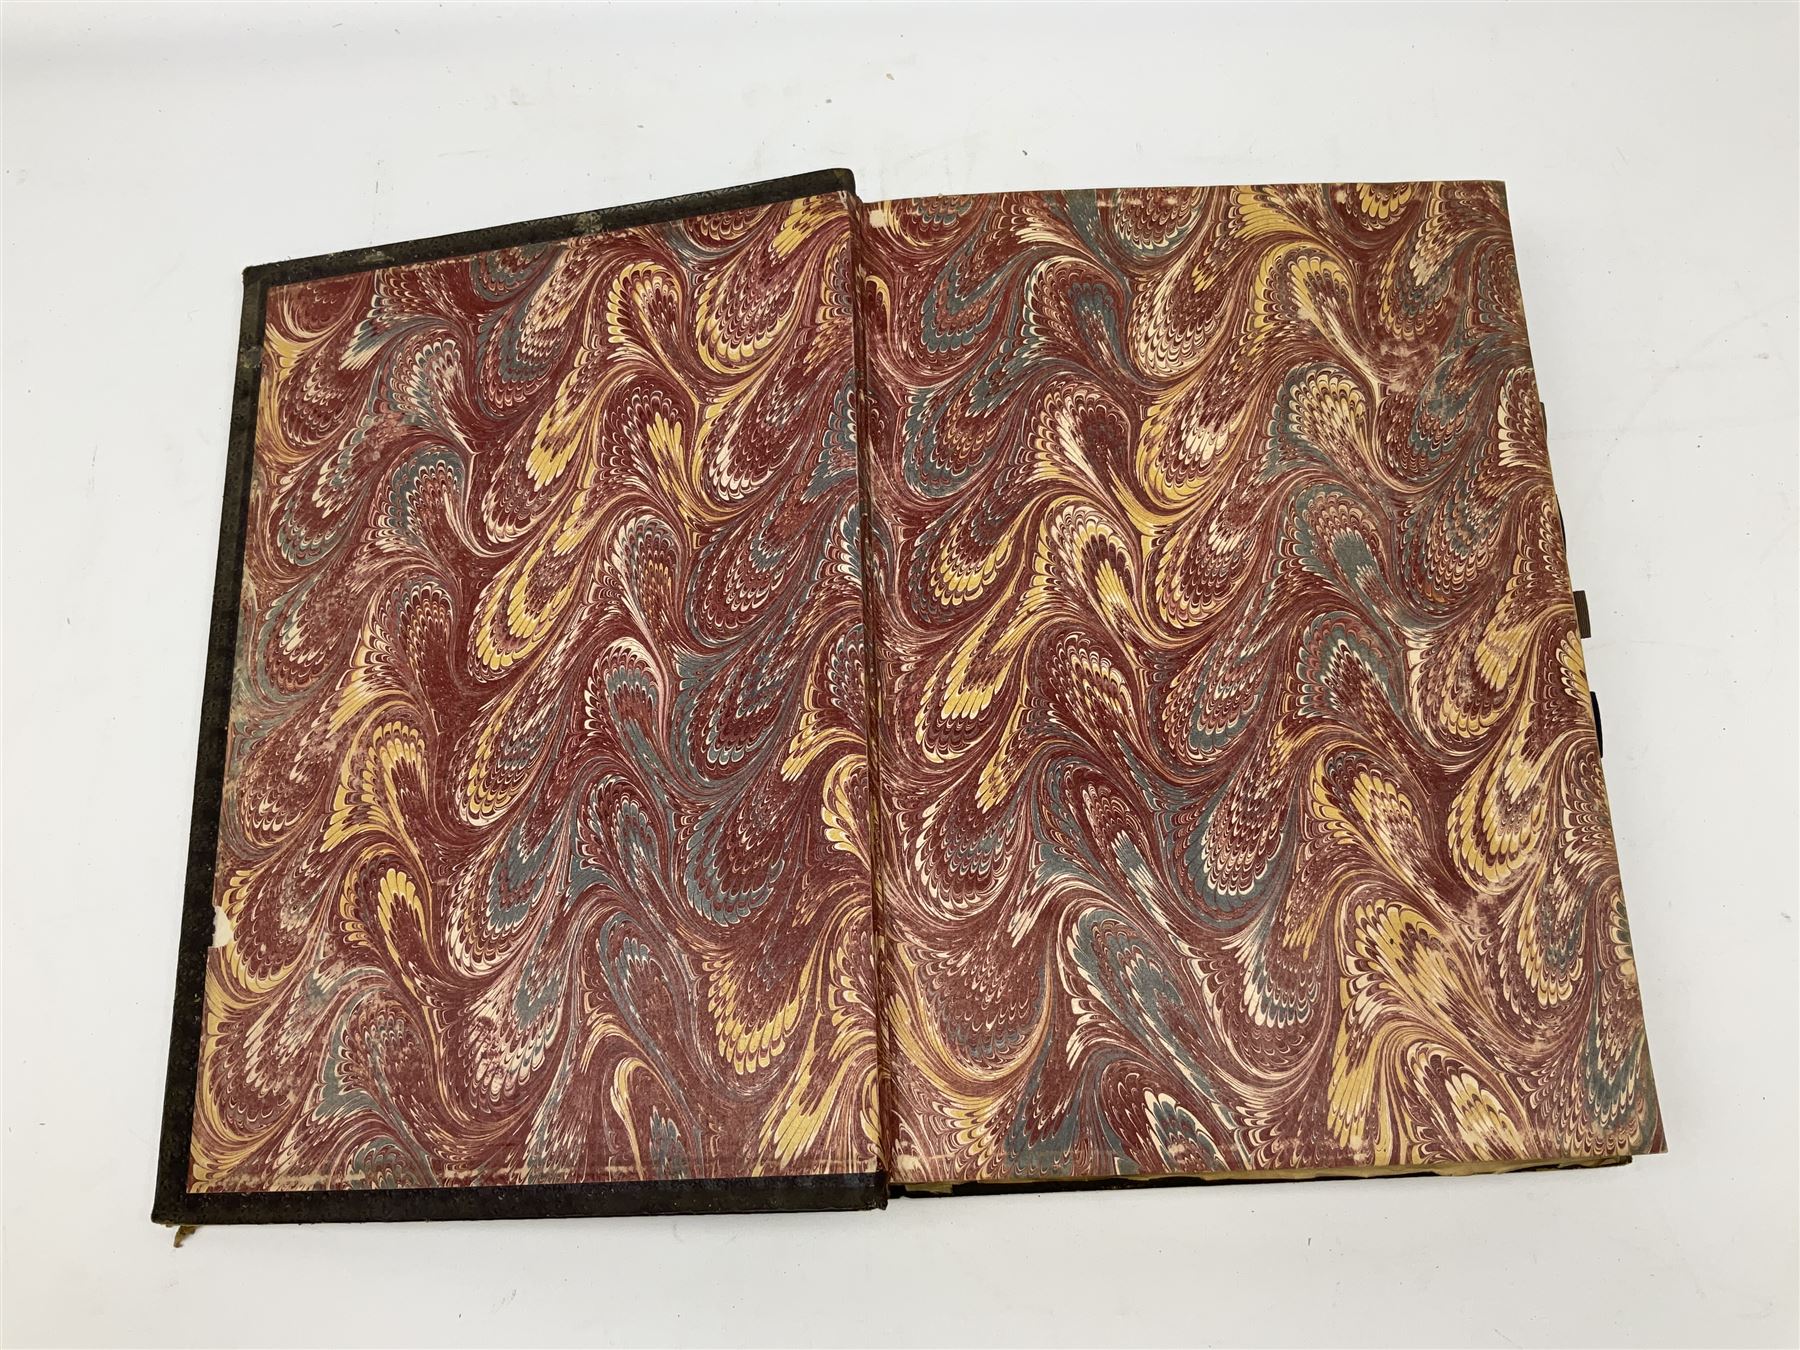 Six 19th century leather bound books of music comprising Graduale Juxta Missale Romanum and Antiphon - Image 13 of 21